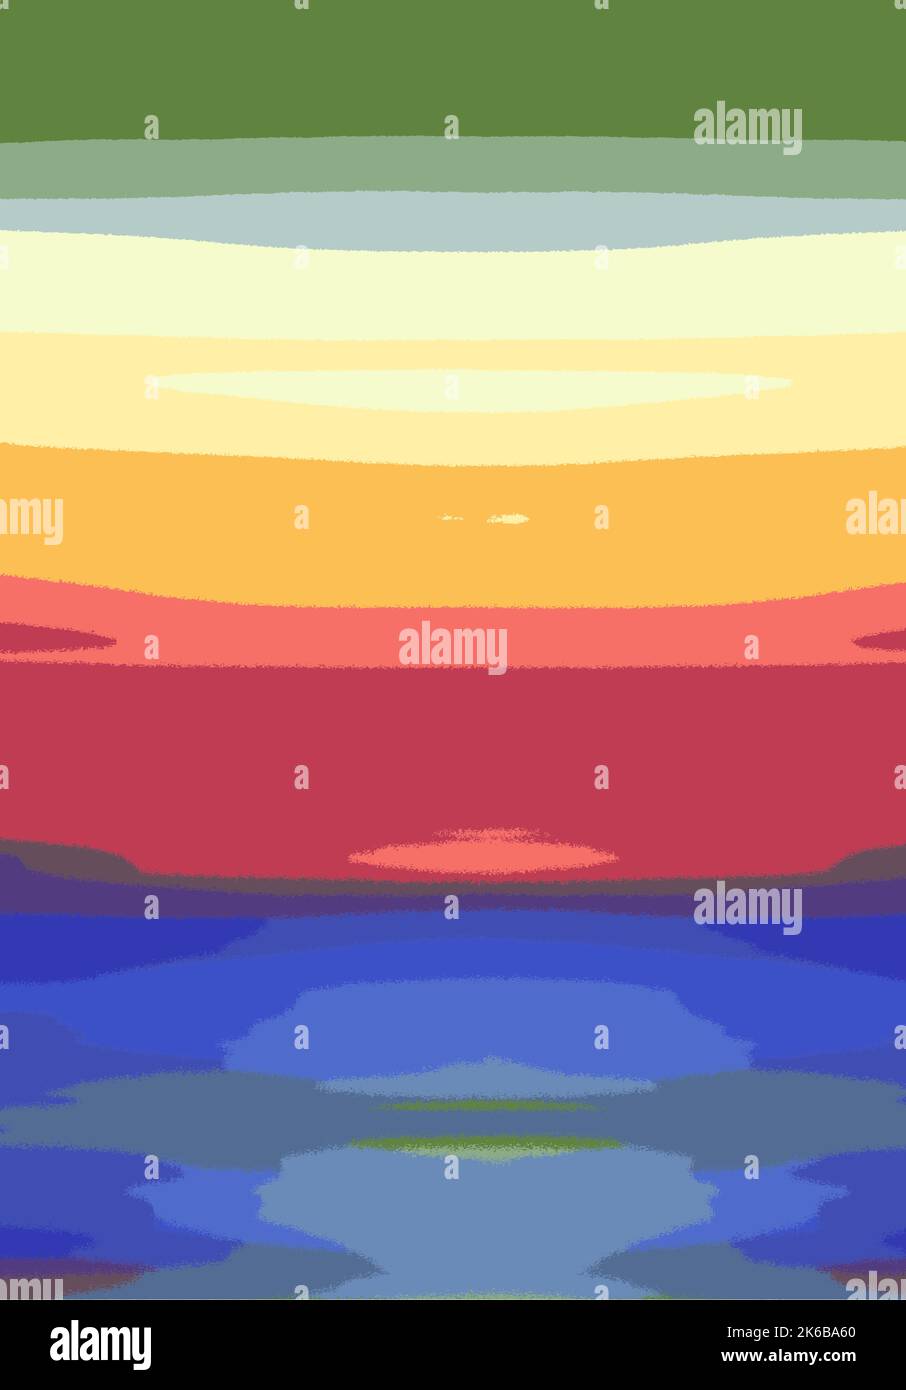 Abstrakte Landschaftskunst Illustration Horizont Himmel Ozean Vektor - Regenbogenfarben Stock Vektor